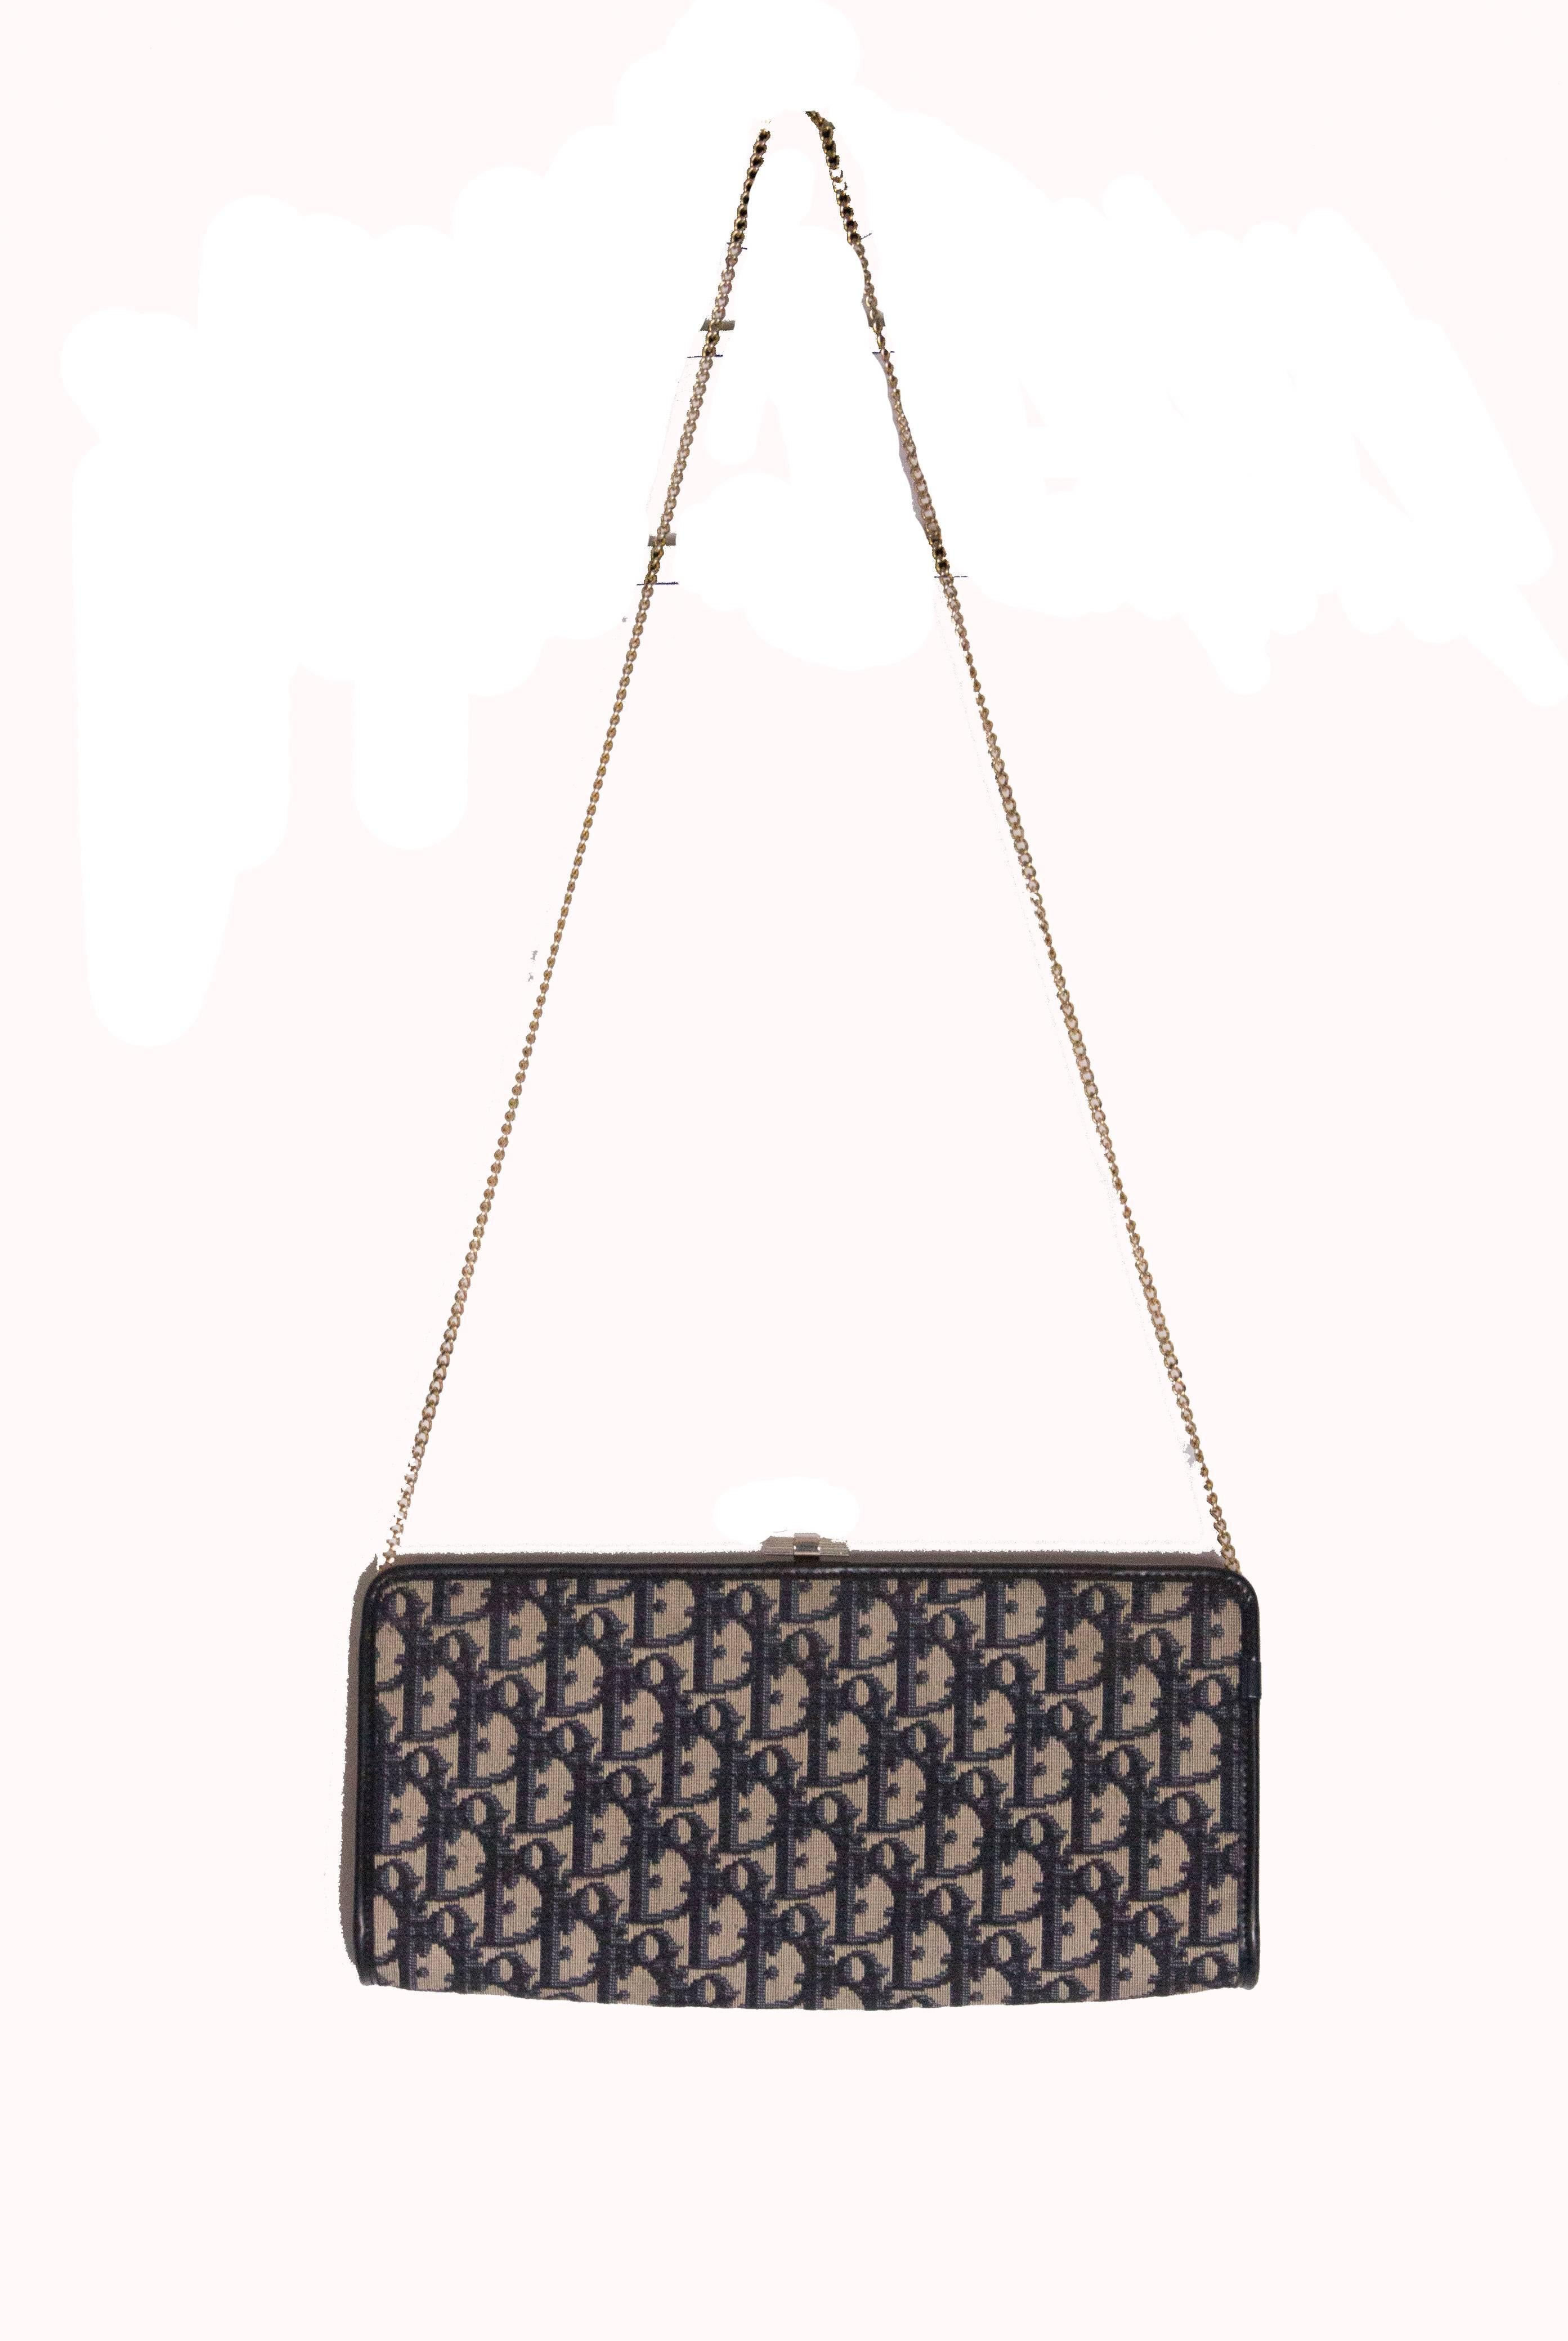 Black Christian Dior Vintage Handbag